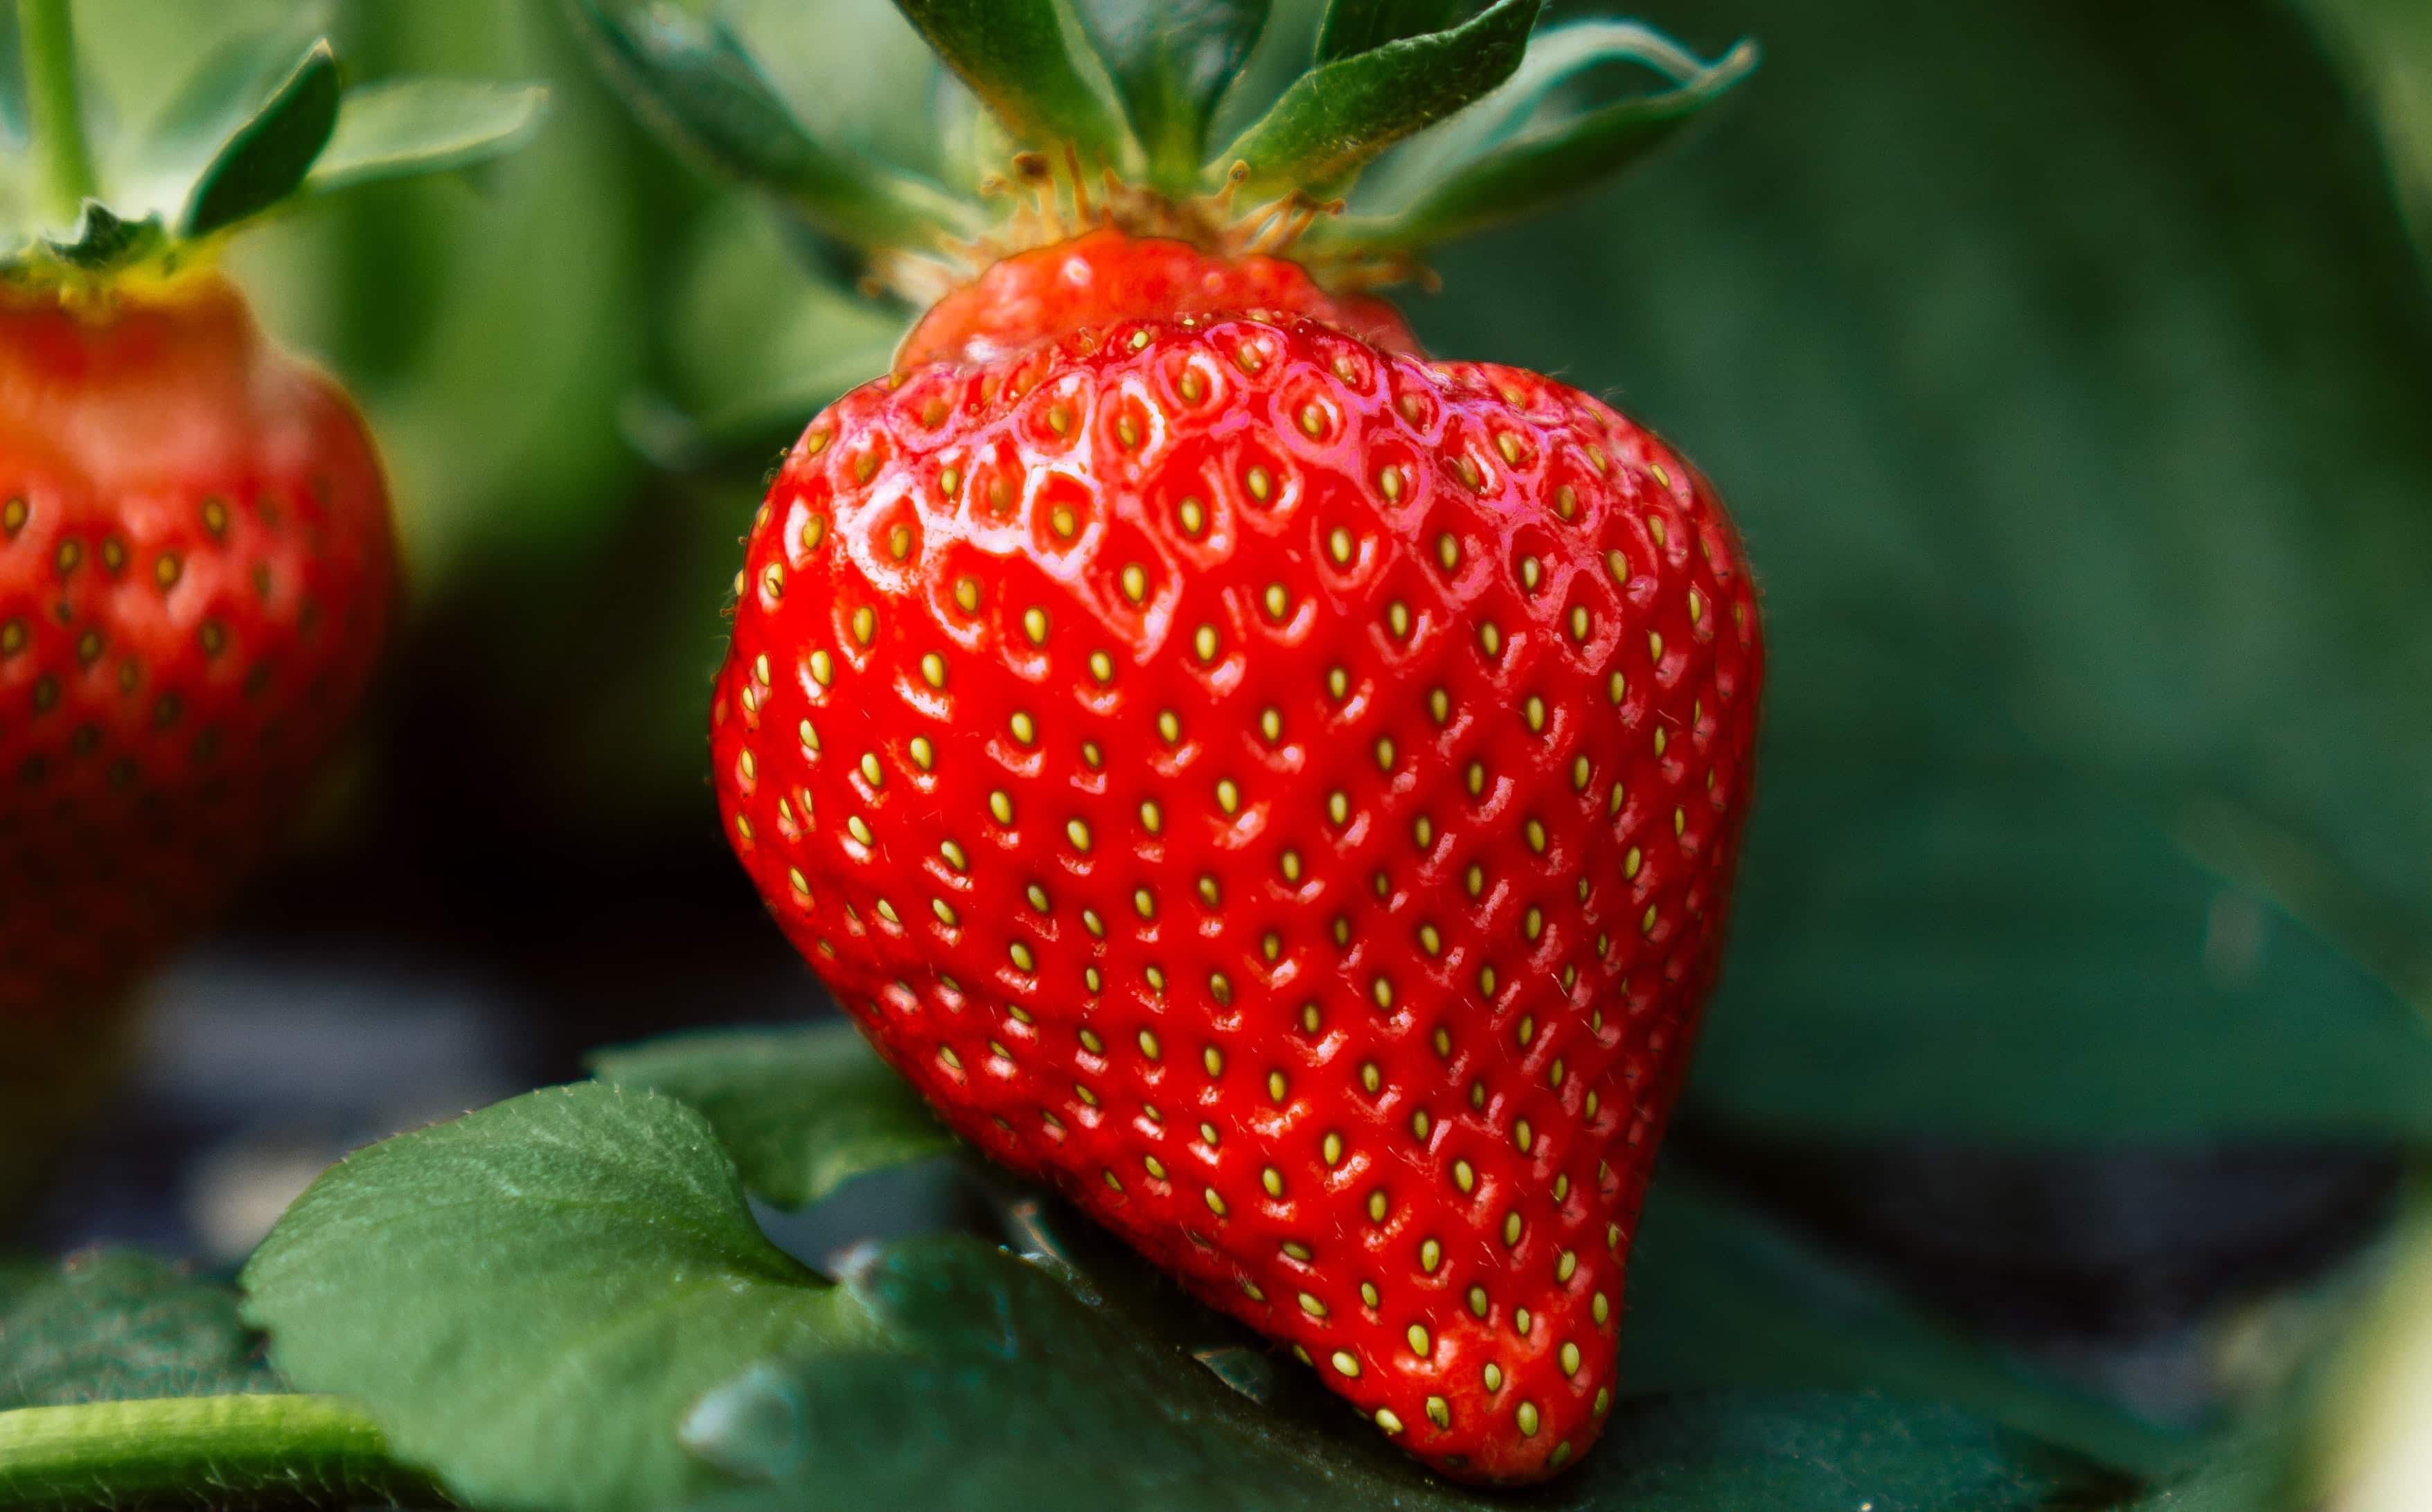 Photo of Strawberry